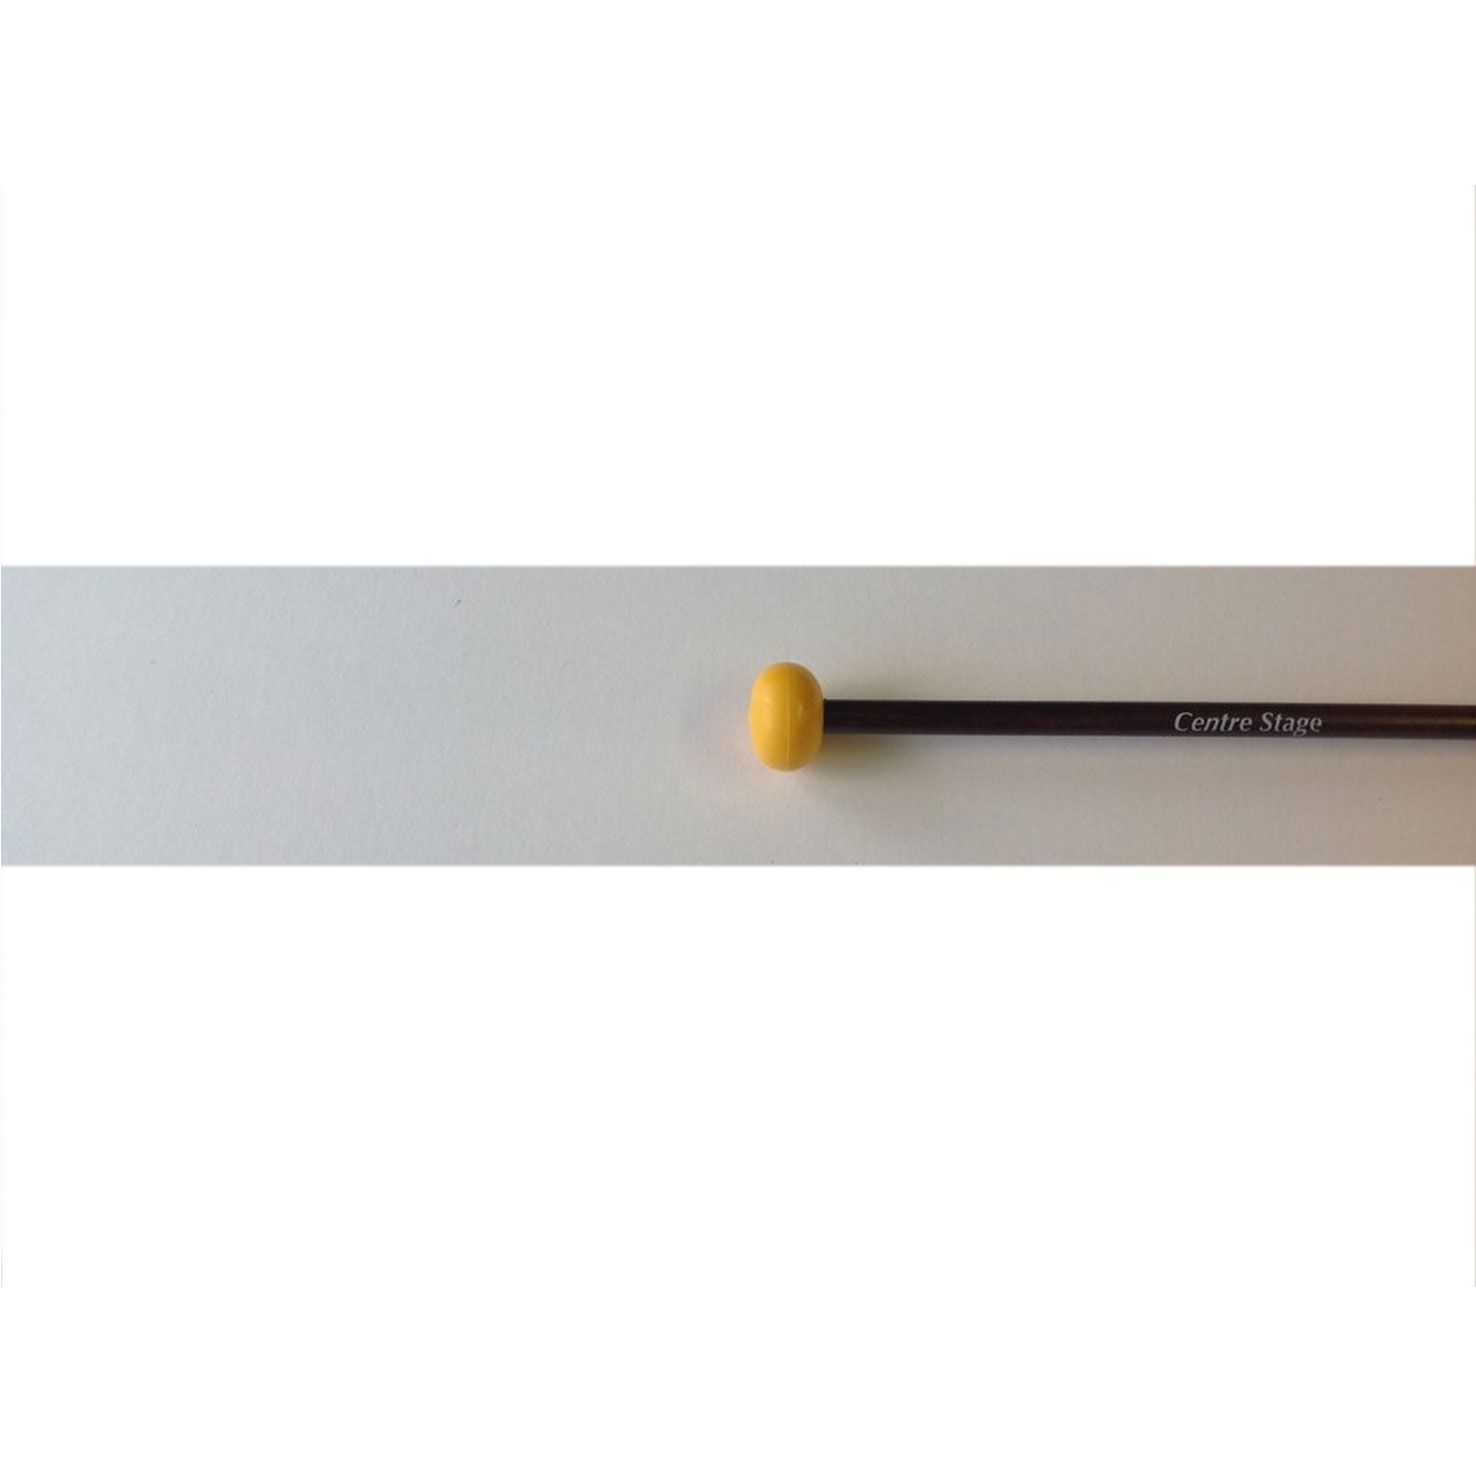 Xylophone - Medium Hard Yellow Small Head Mallet